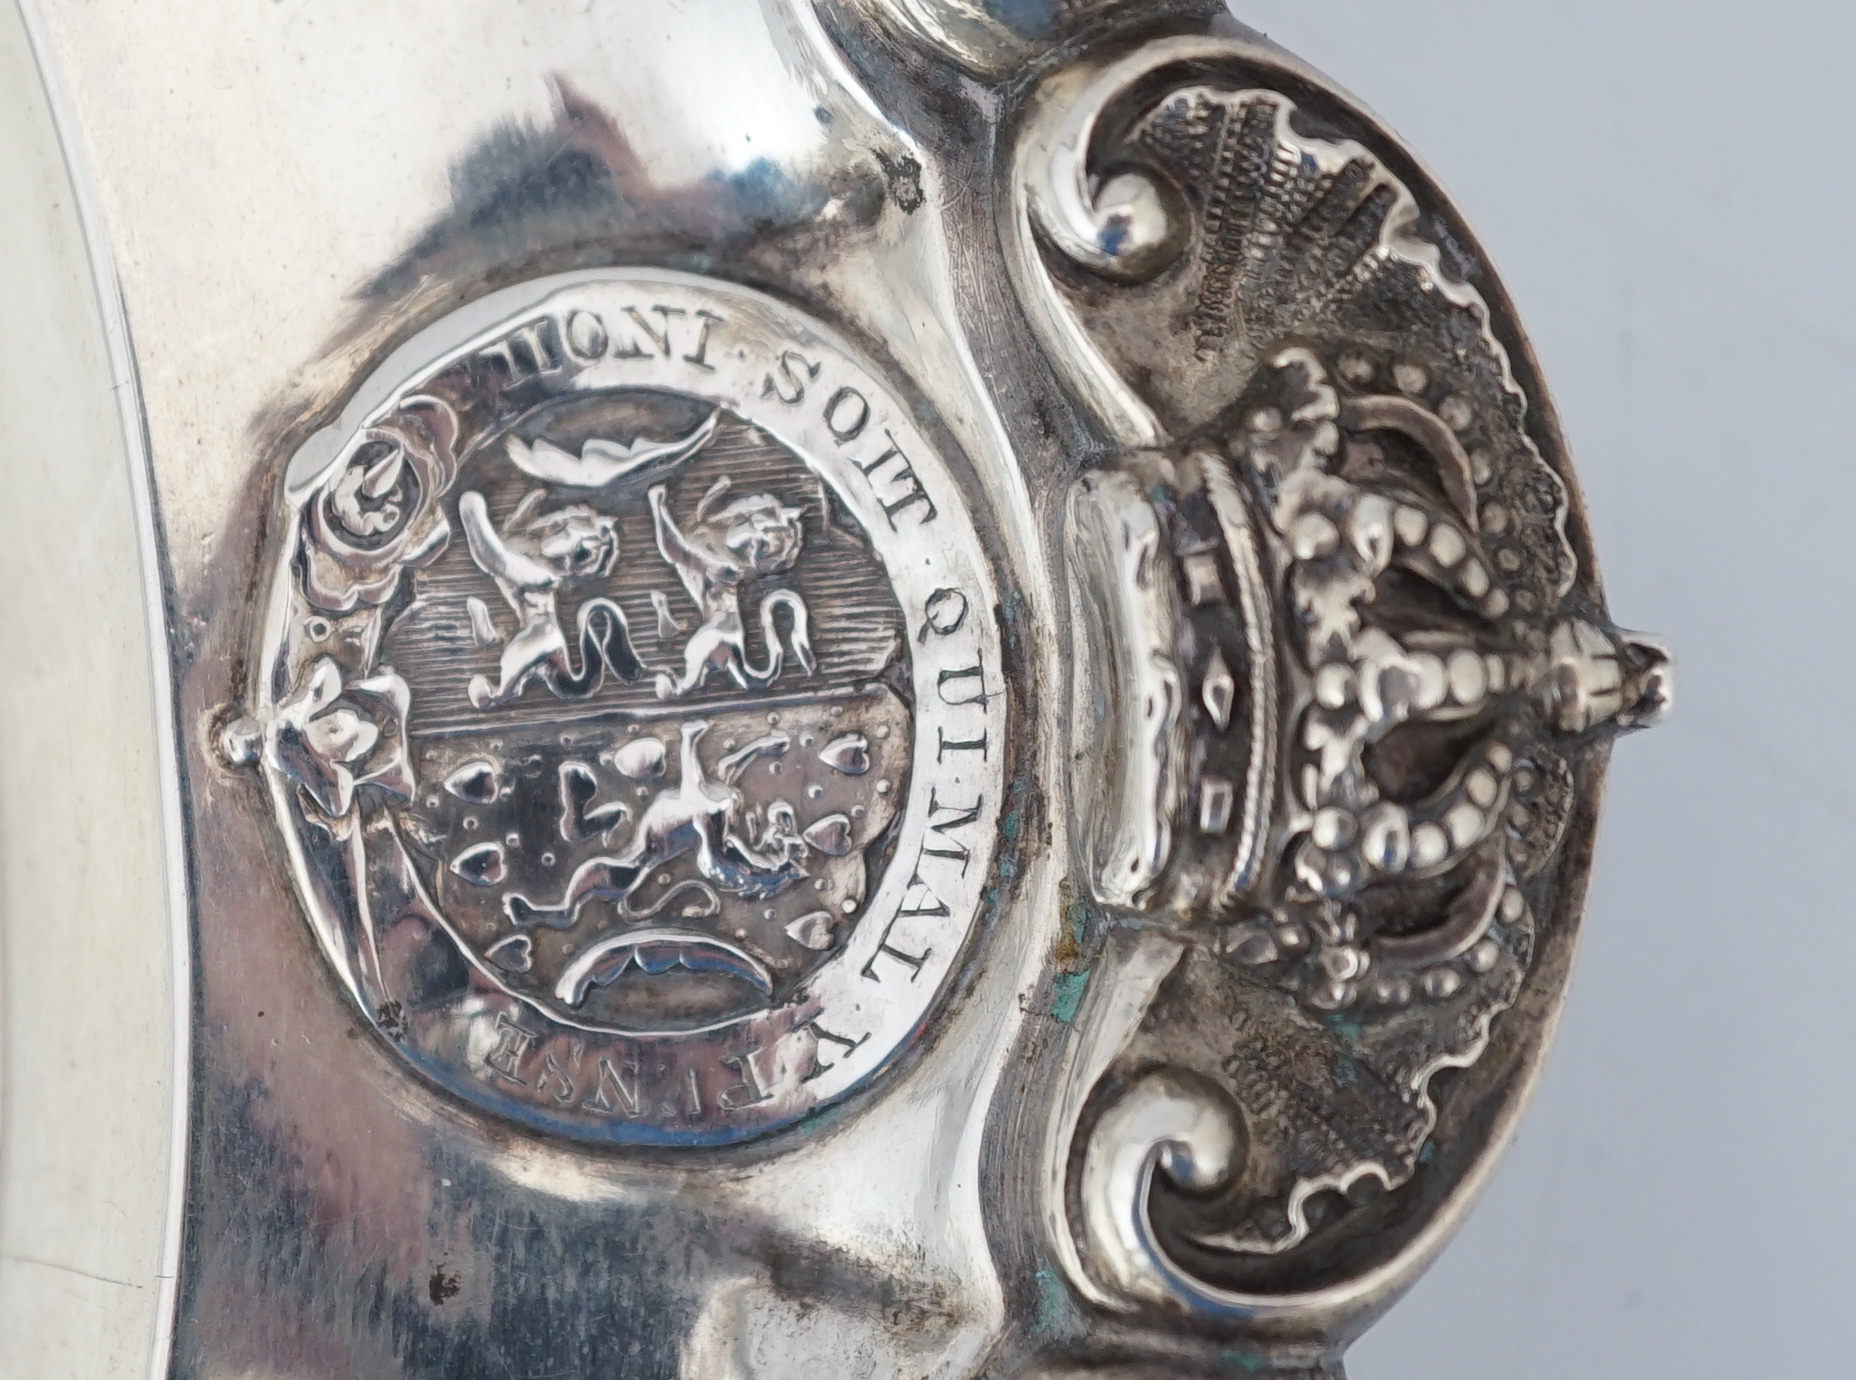 Duke of Brunswick service: An early Victorian silver serving plate by John Mortimer & John Samuel Hunt